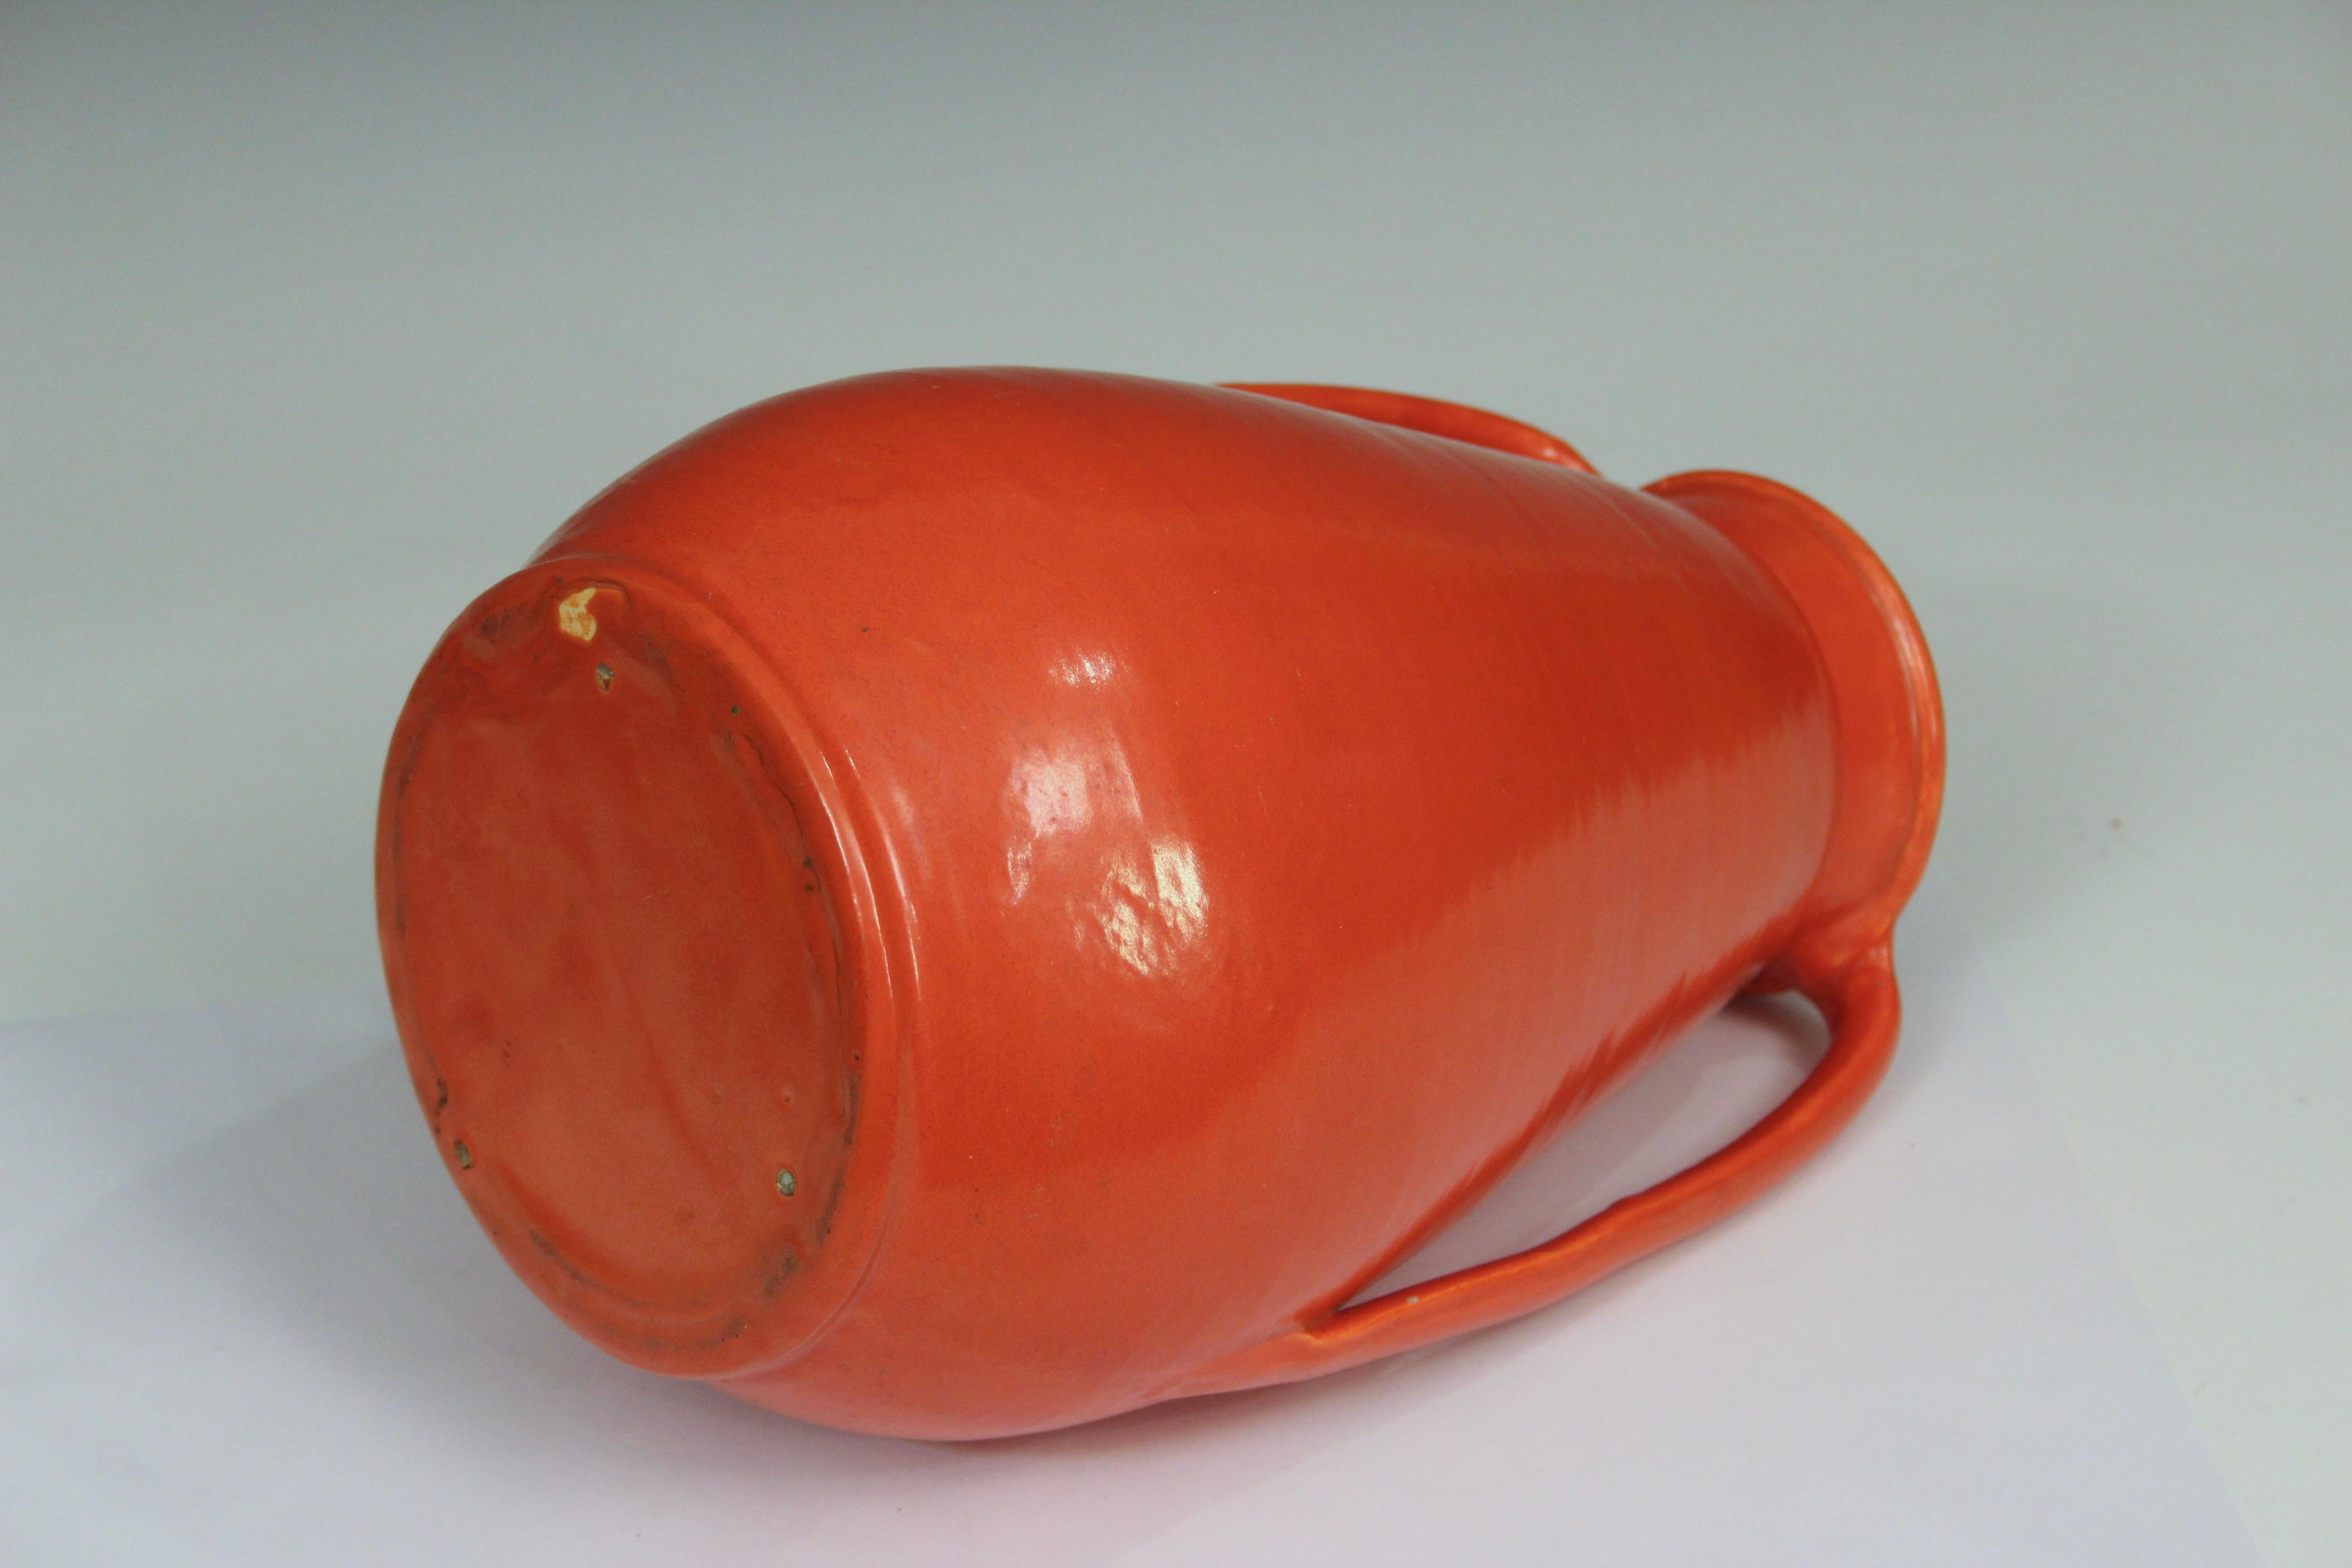 Mid-20th Century Stangl Pottery Vase Art Deco Chrome Orange Red Vintage Large American